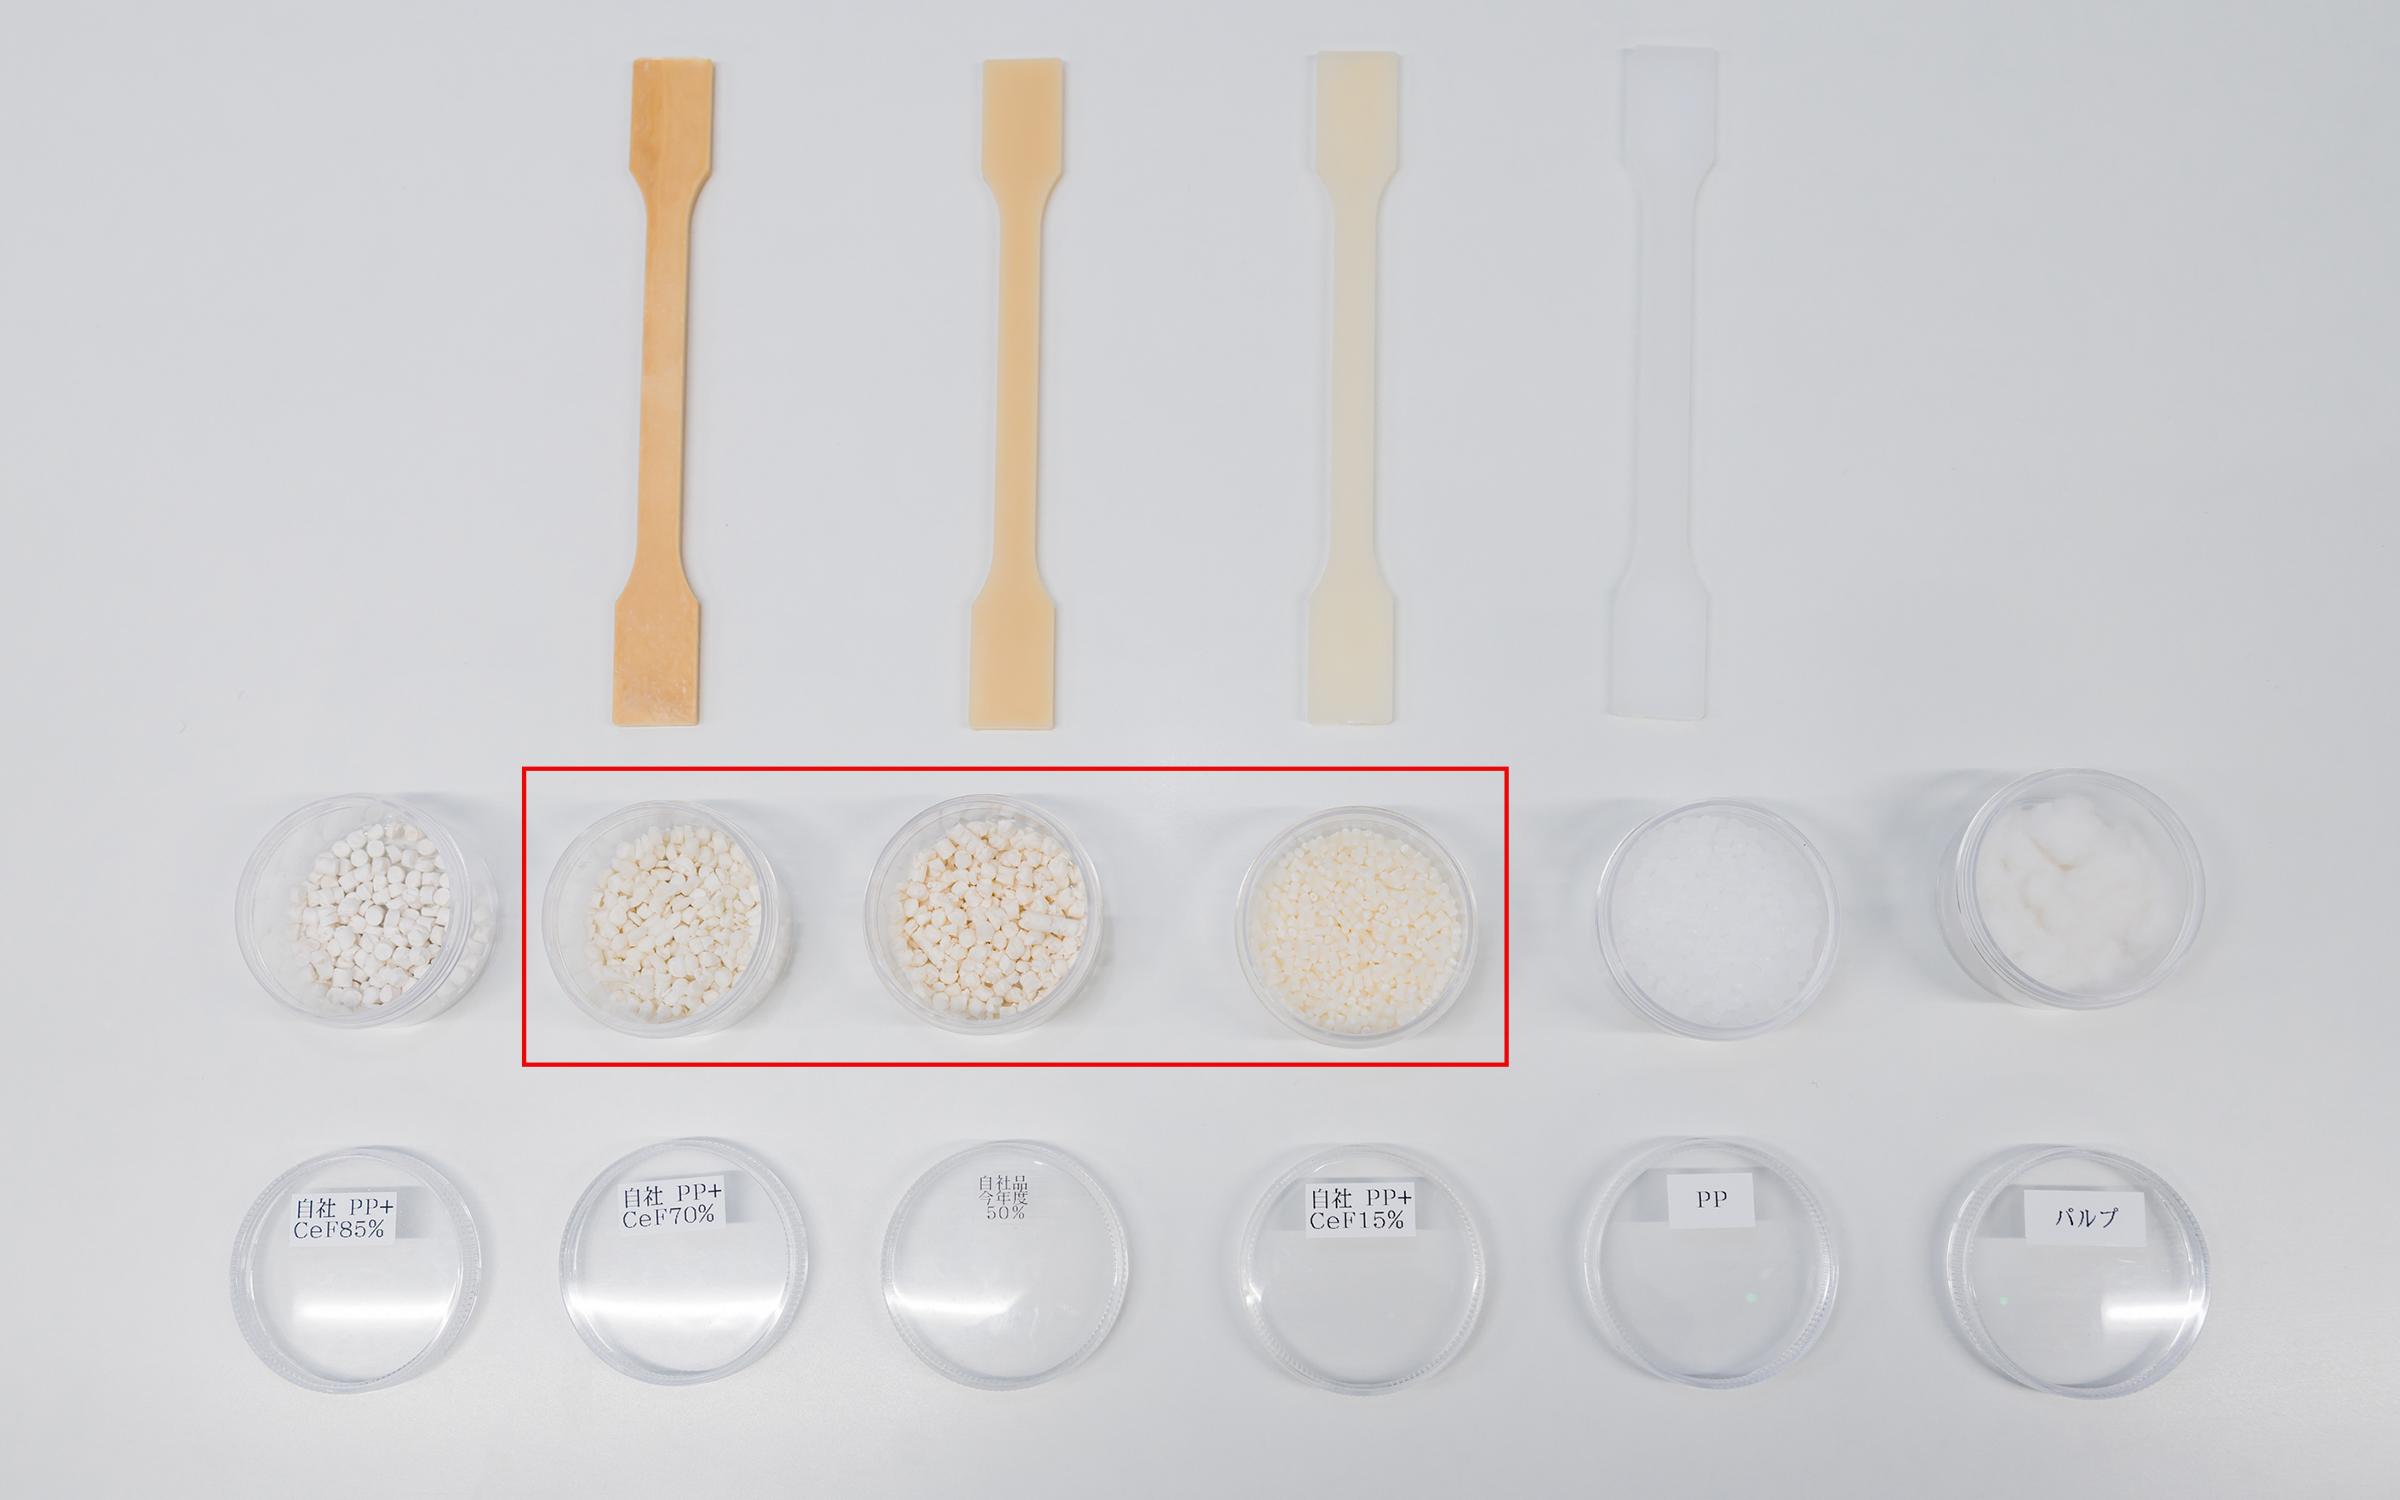 Photo: The prototype pellets of cellulose fiber